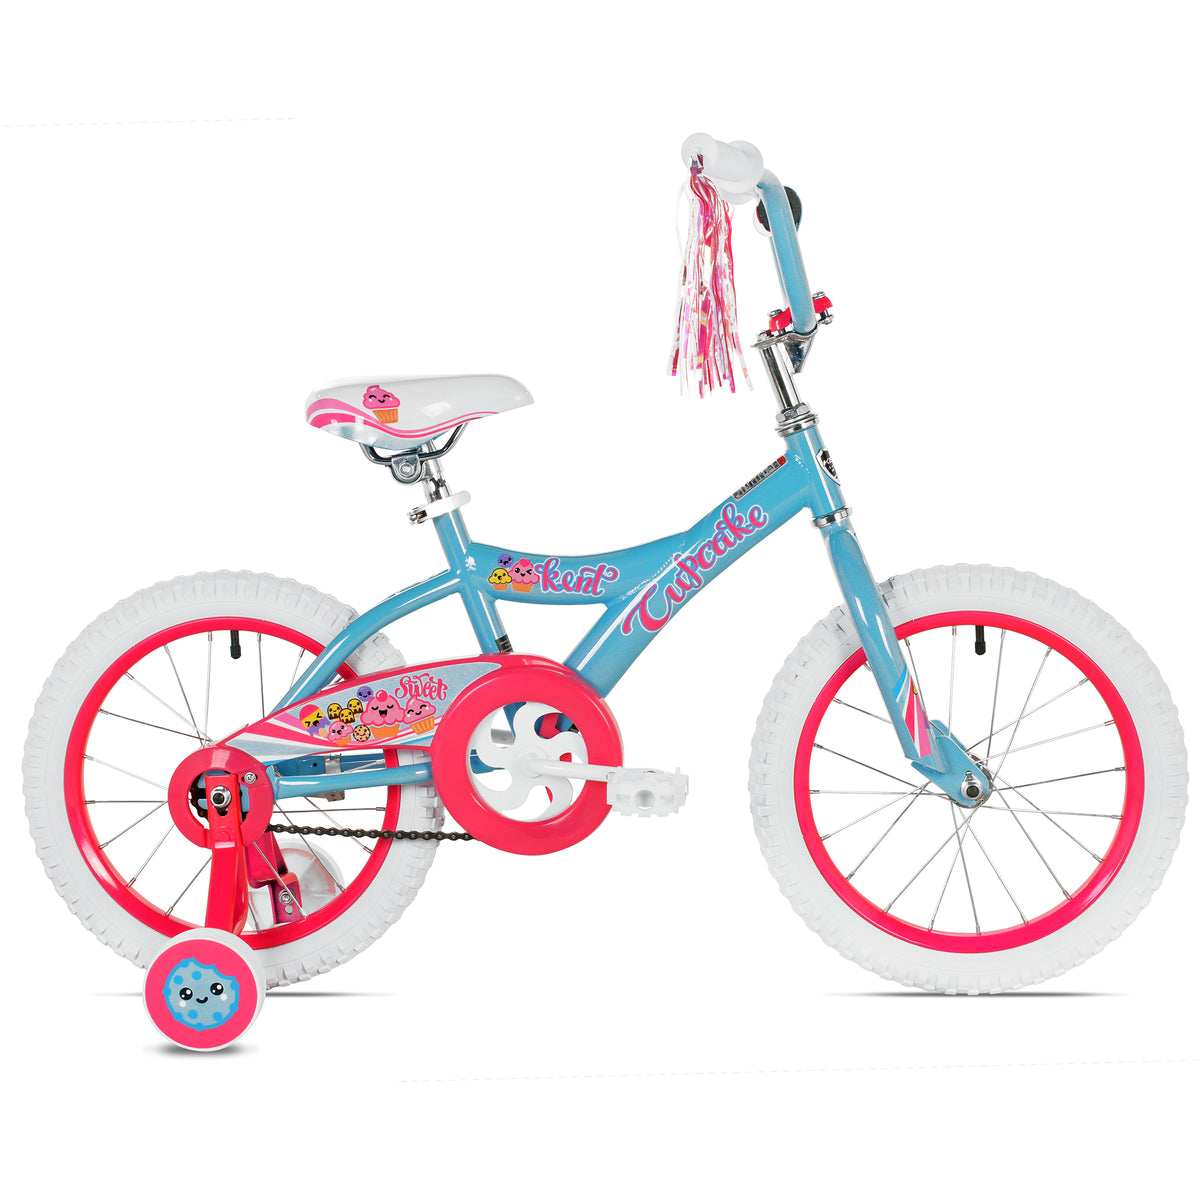 16" Kent Cupcake | Cruiser Bike for Kids Ages 4-6